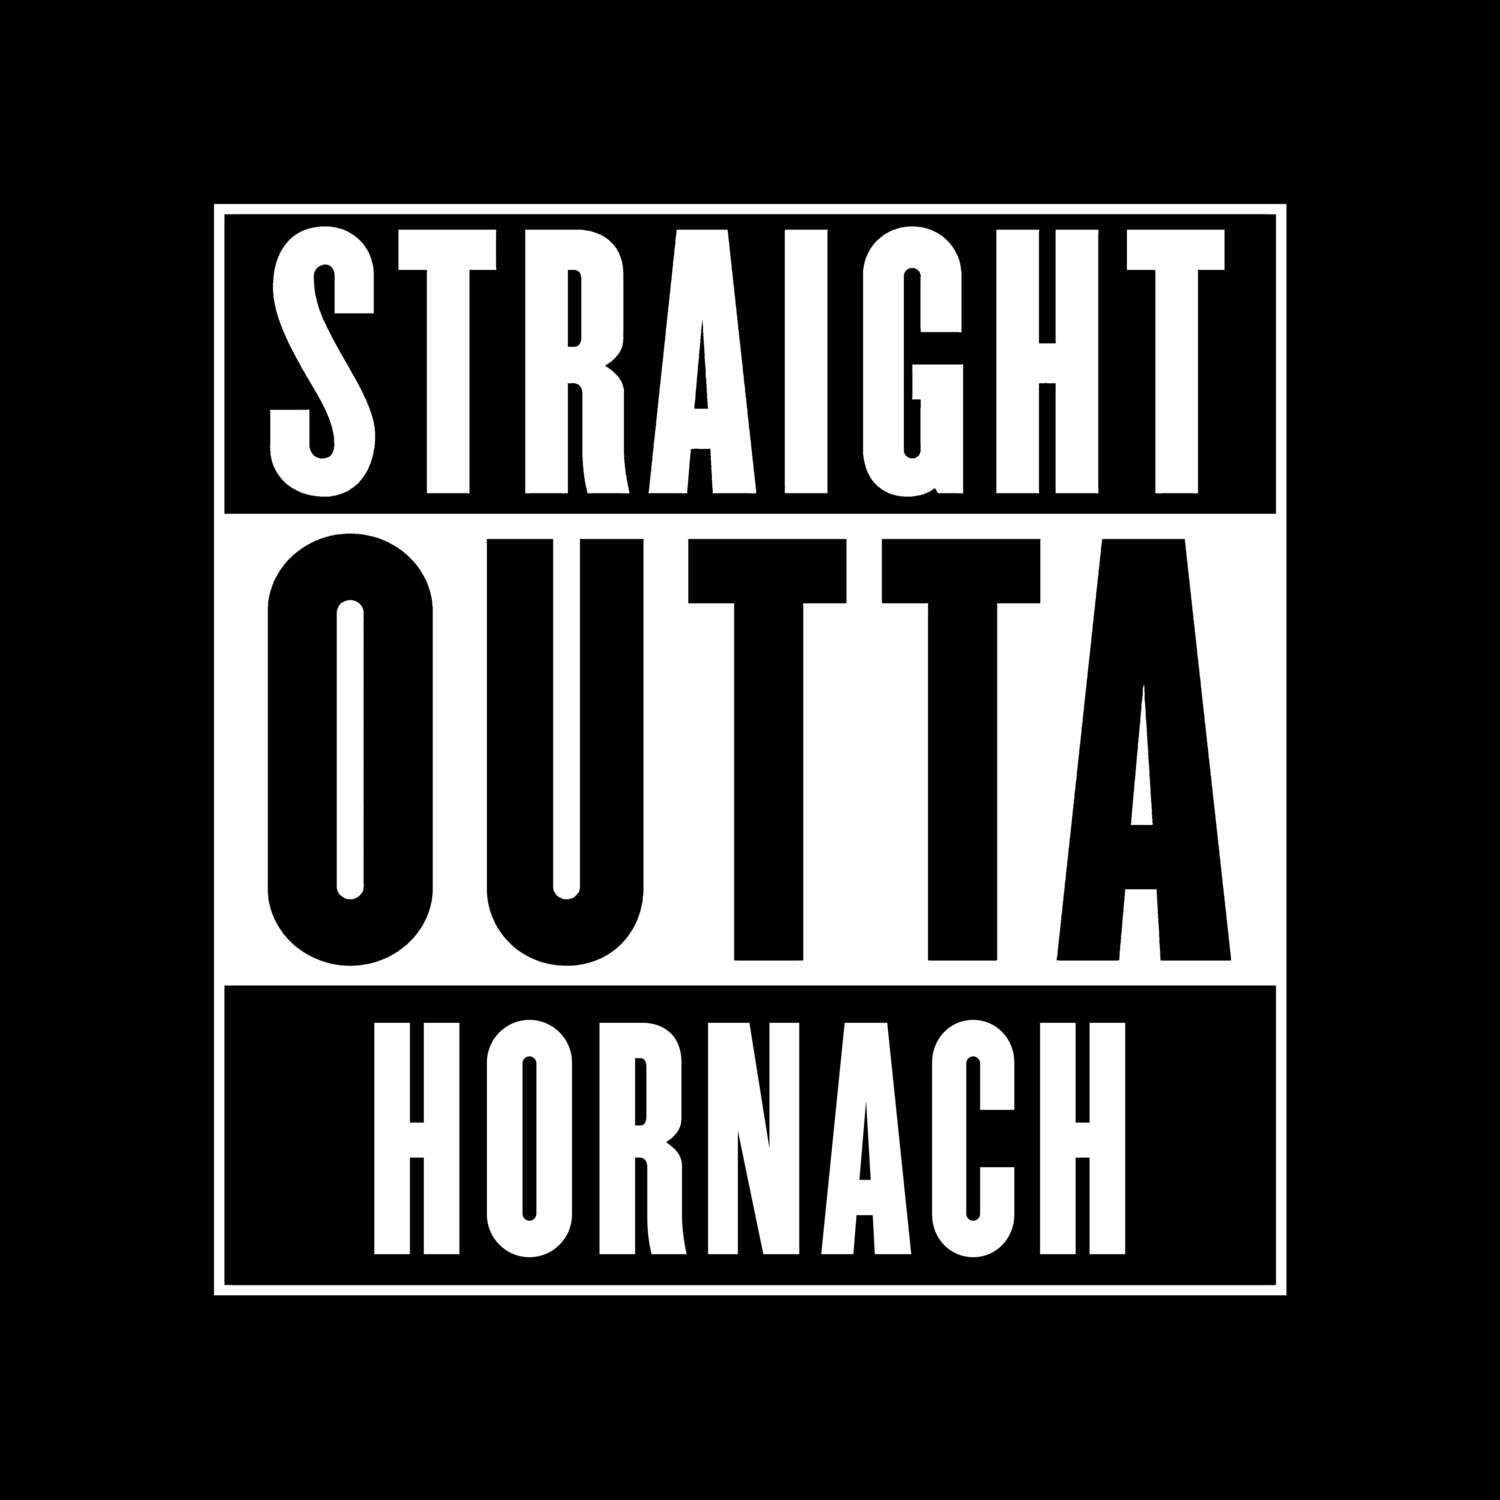 Hornach T-Shirt »Straight Outta«